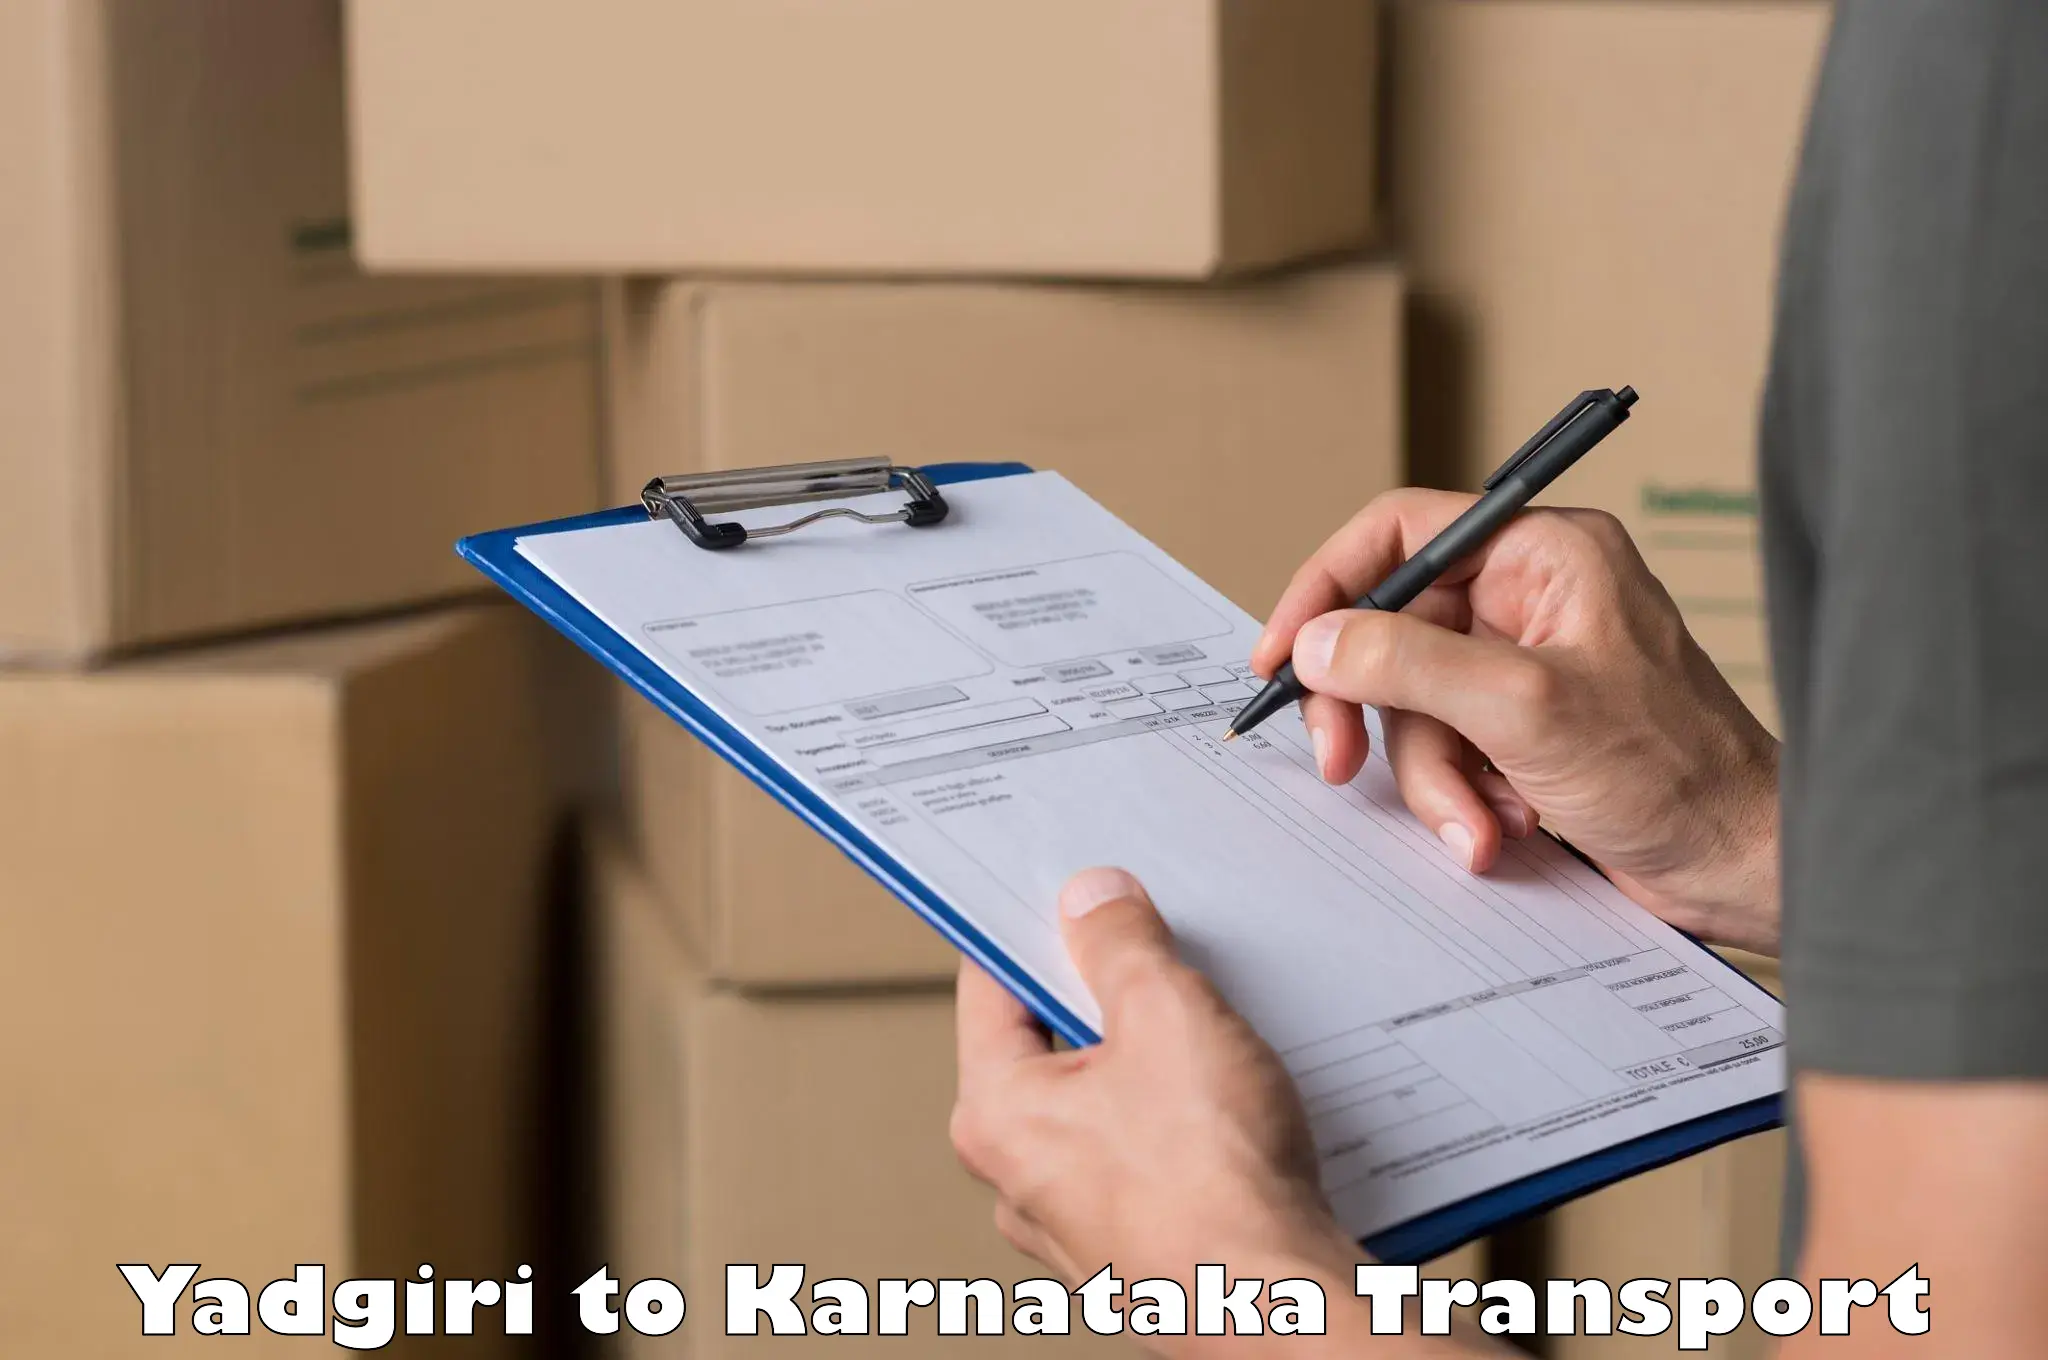 Goods delivery service Yadgiri to Karnataka